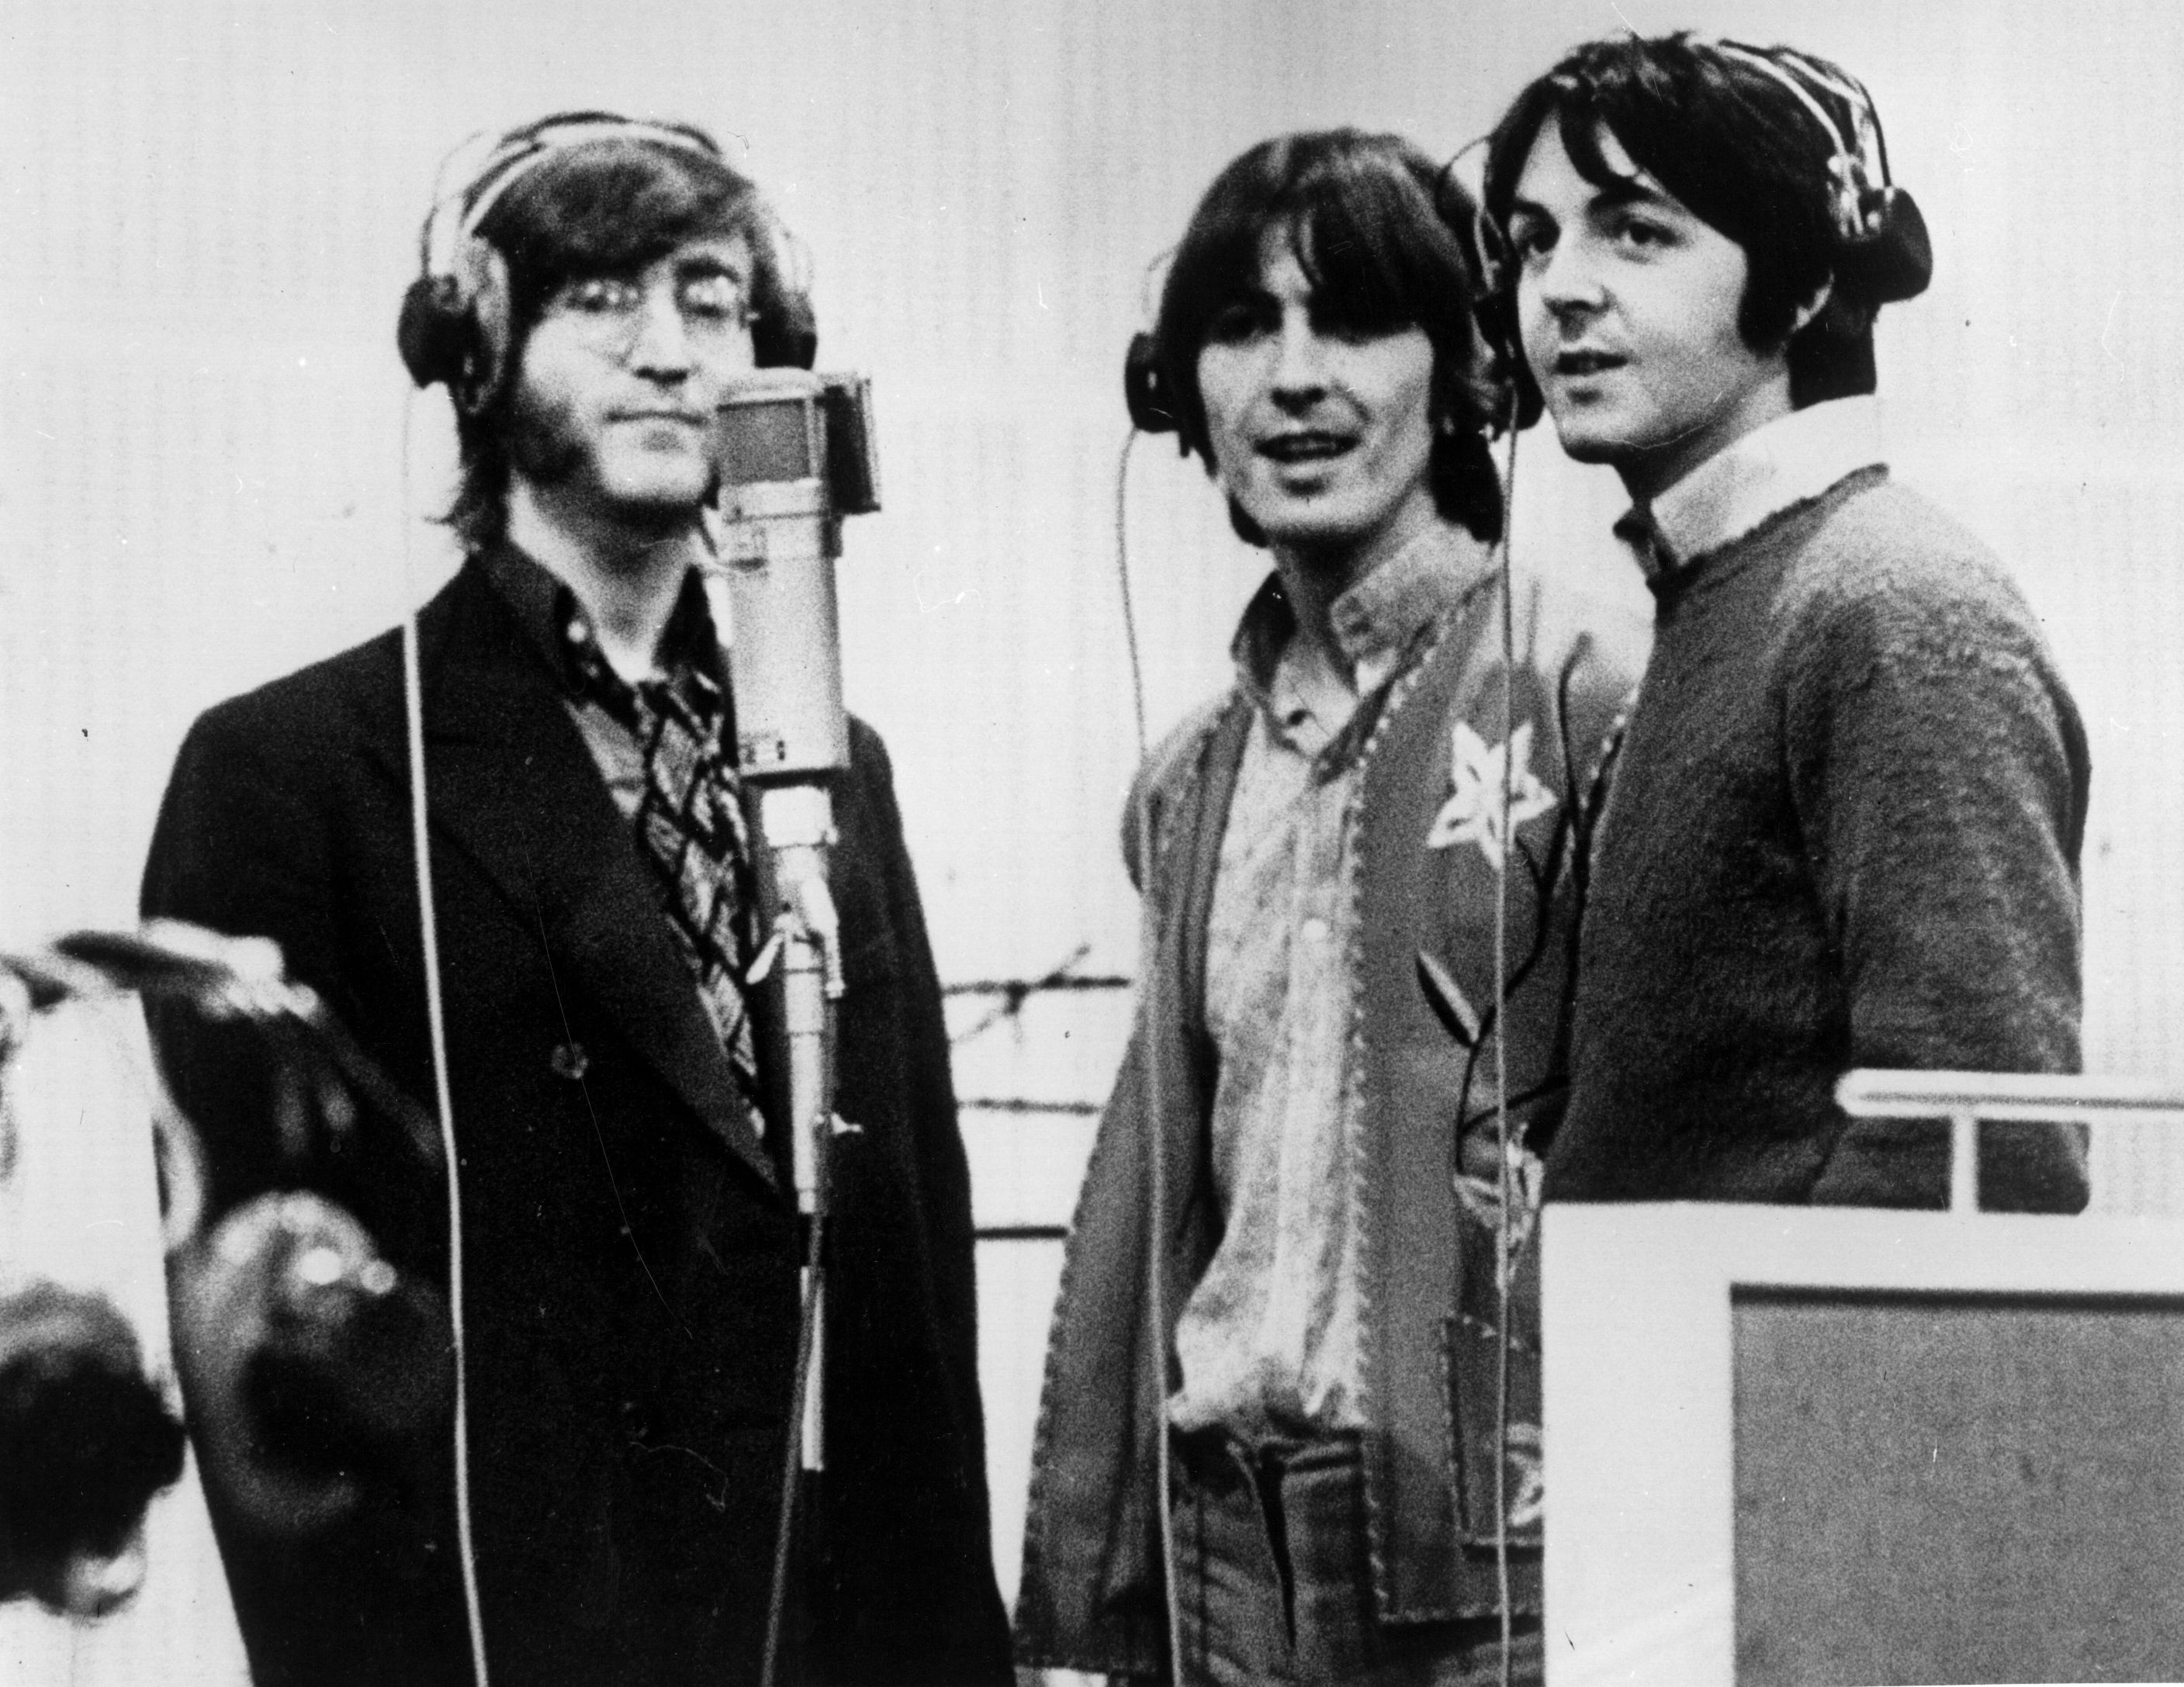 The Beatles' John Lennon, George Harrison, and Paul McCartney near a microphone during the 'Revolver' era